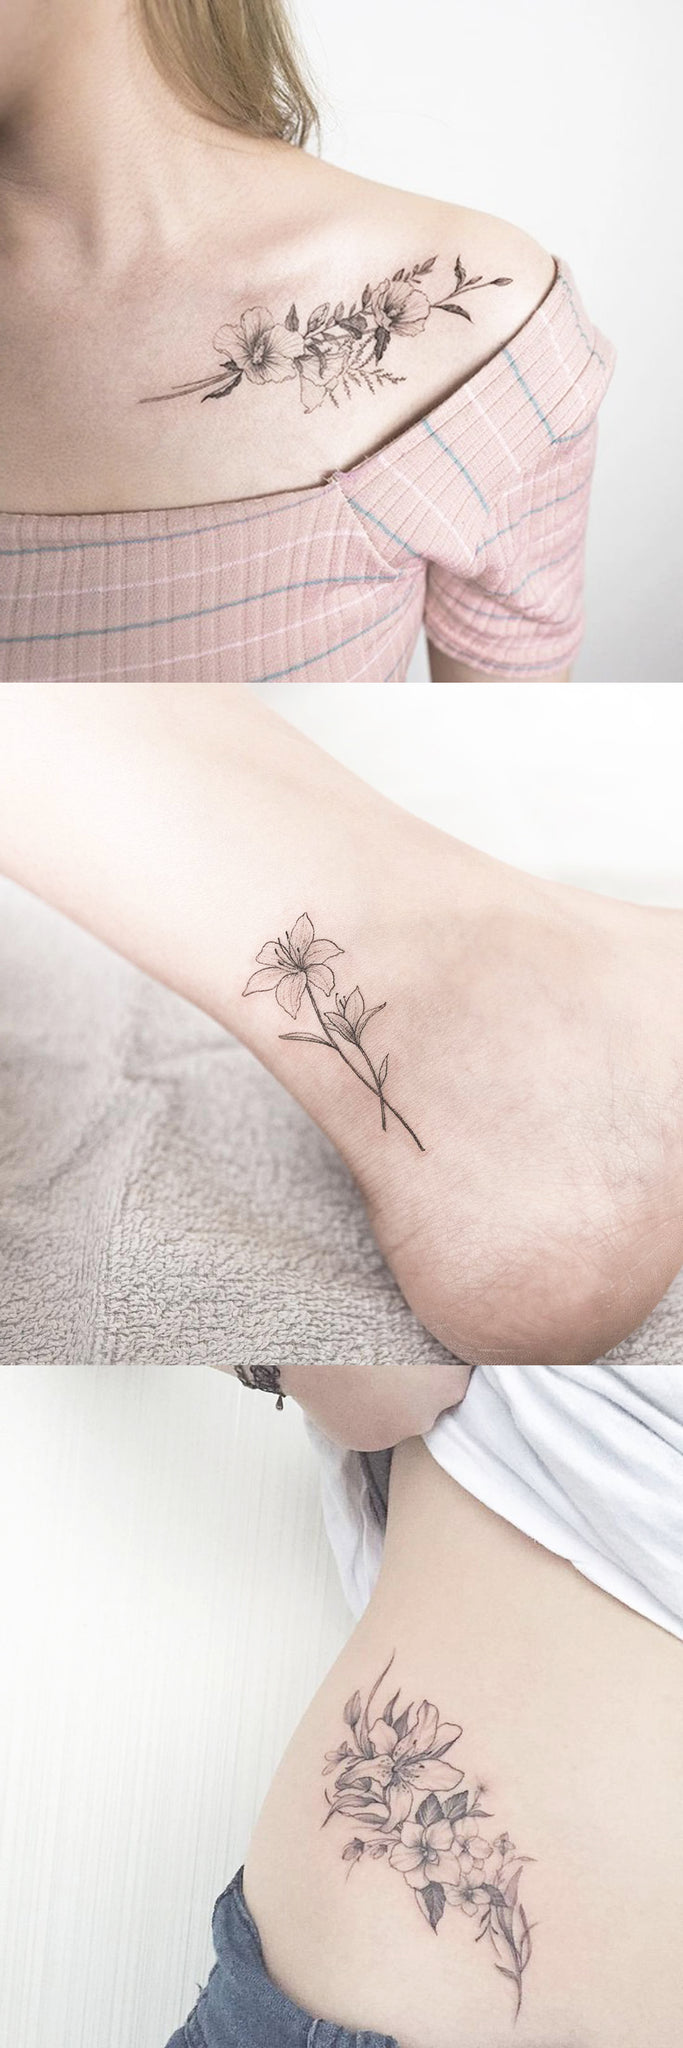 Delicate Sketched Flower Shoulder Tattoo Ideas - Wild Realistic Floral Ankle Tatt - MyBodiArt.com 